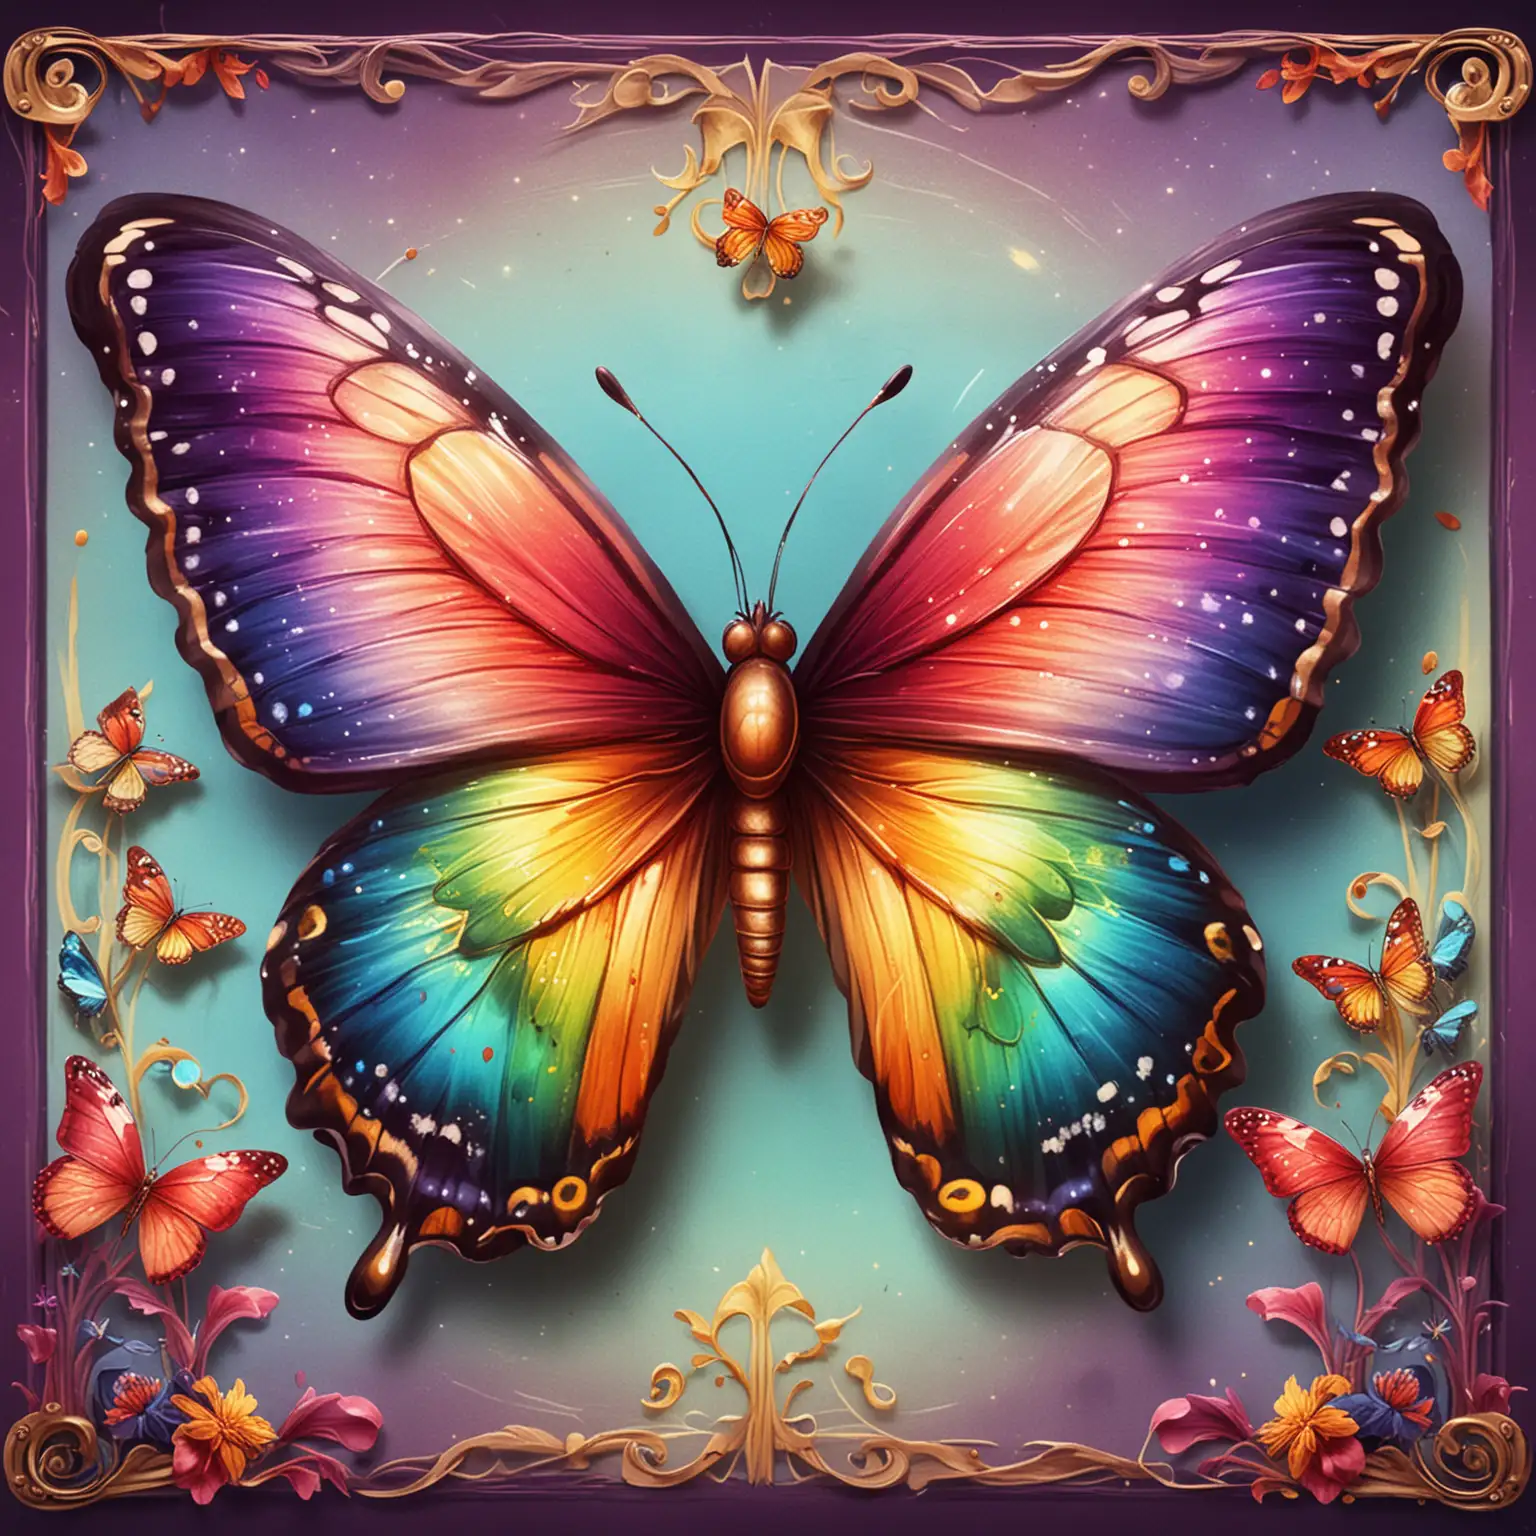 SLOT 游戏的鲜艳的
蝴蝶符号
